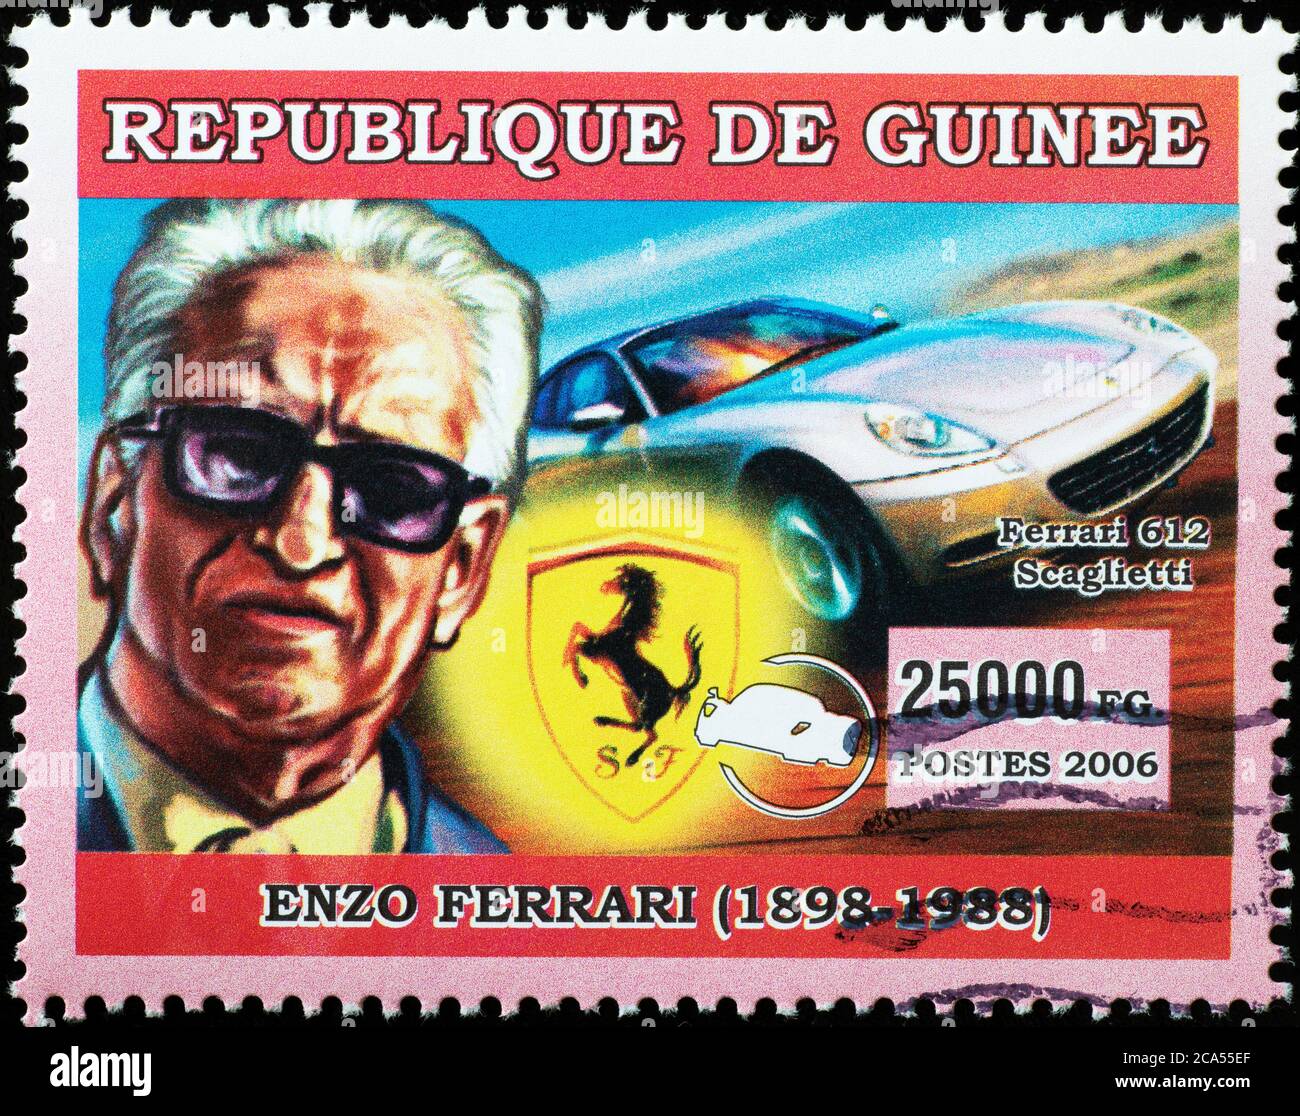 Enzo Ferrari on postage stamp of Guinea Stock Photo